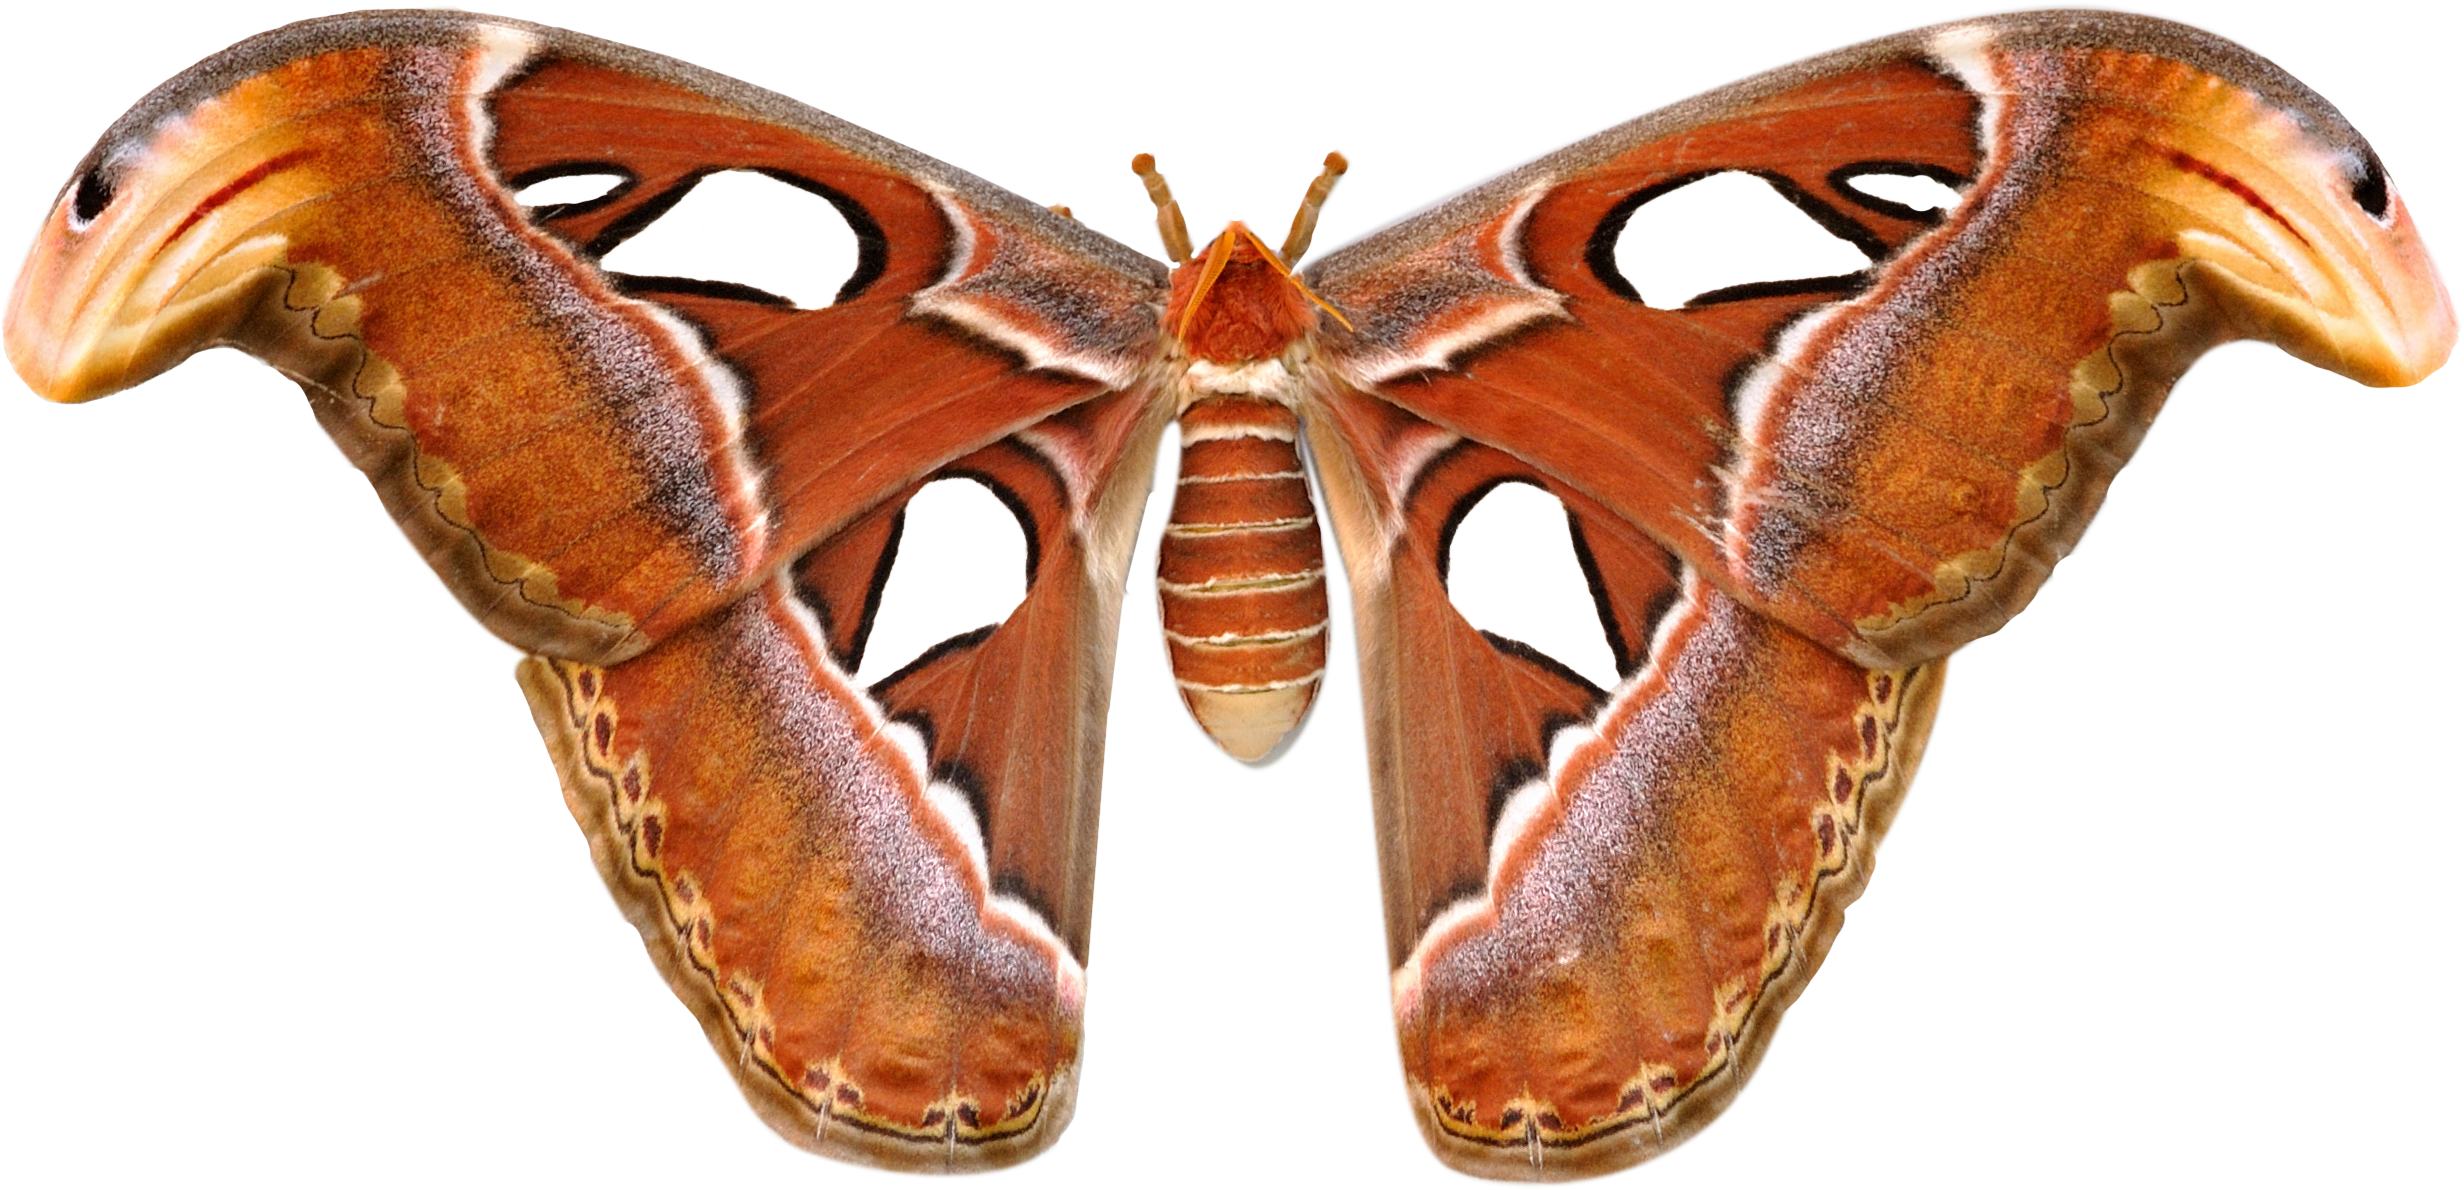 A Close Up Of A Moth